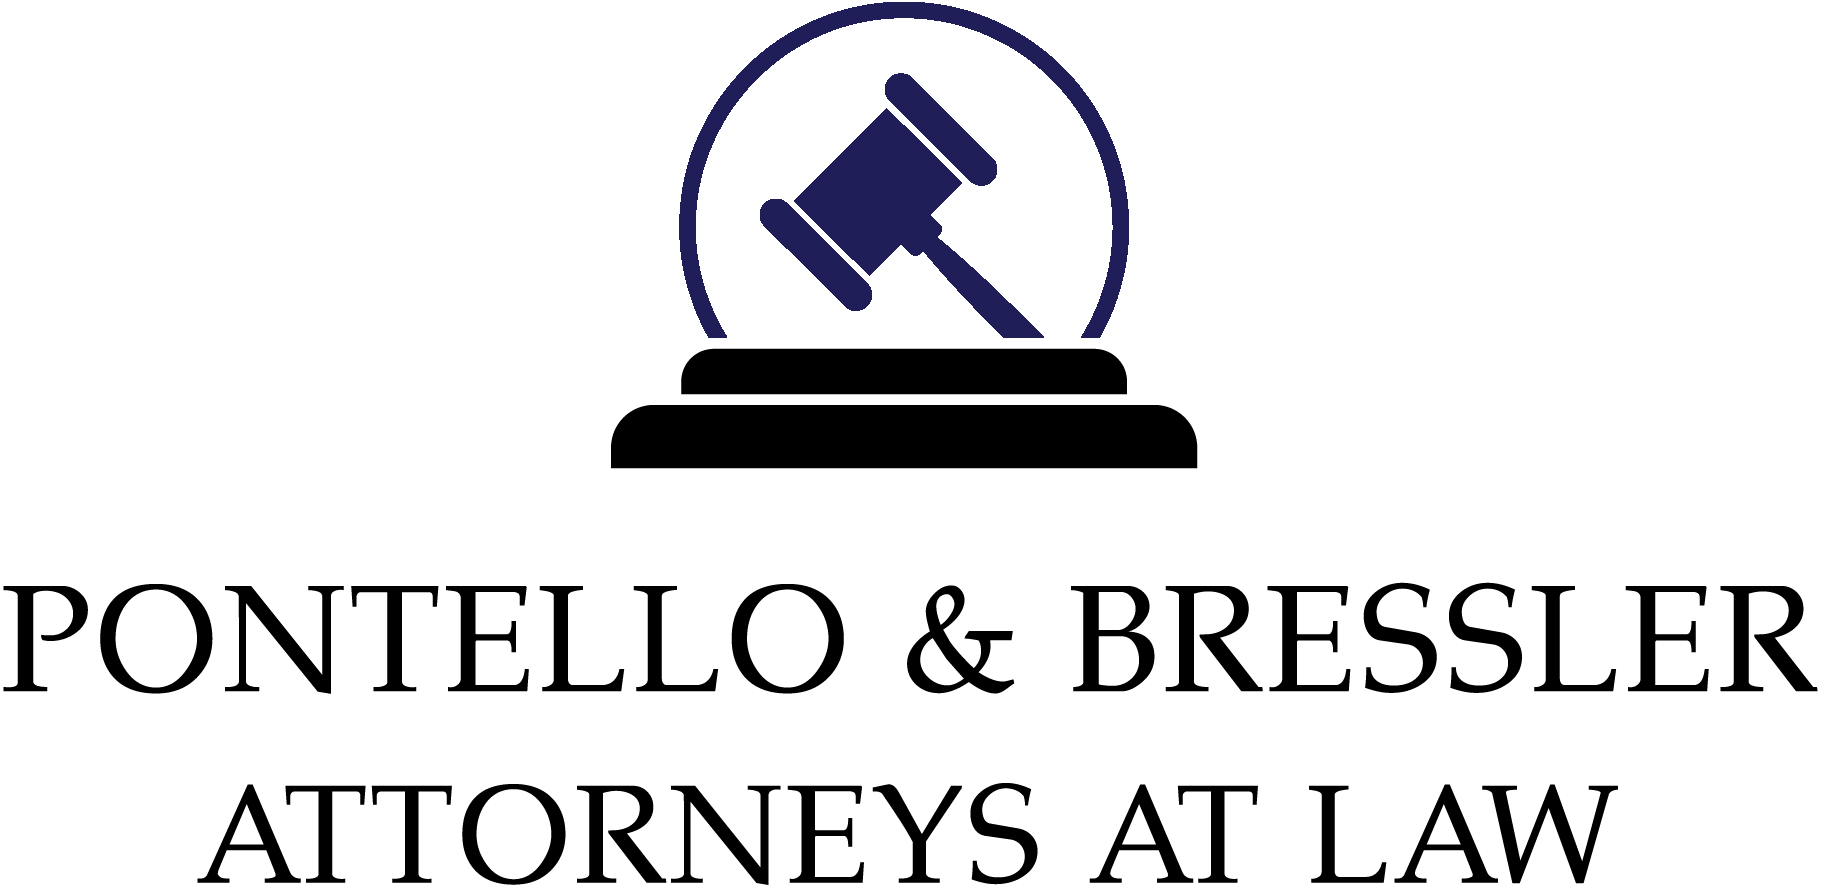 Pontello & Bressler Attorneys at Law Logo